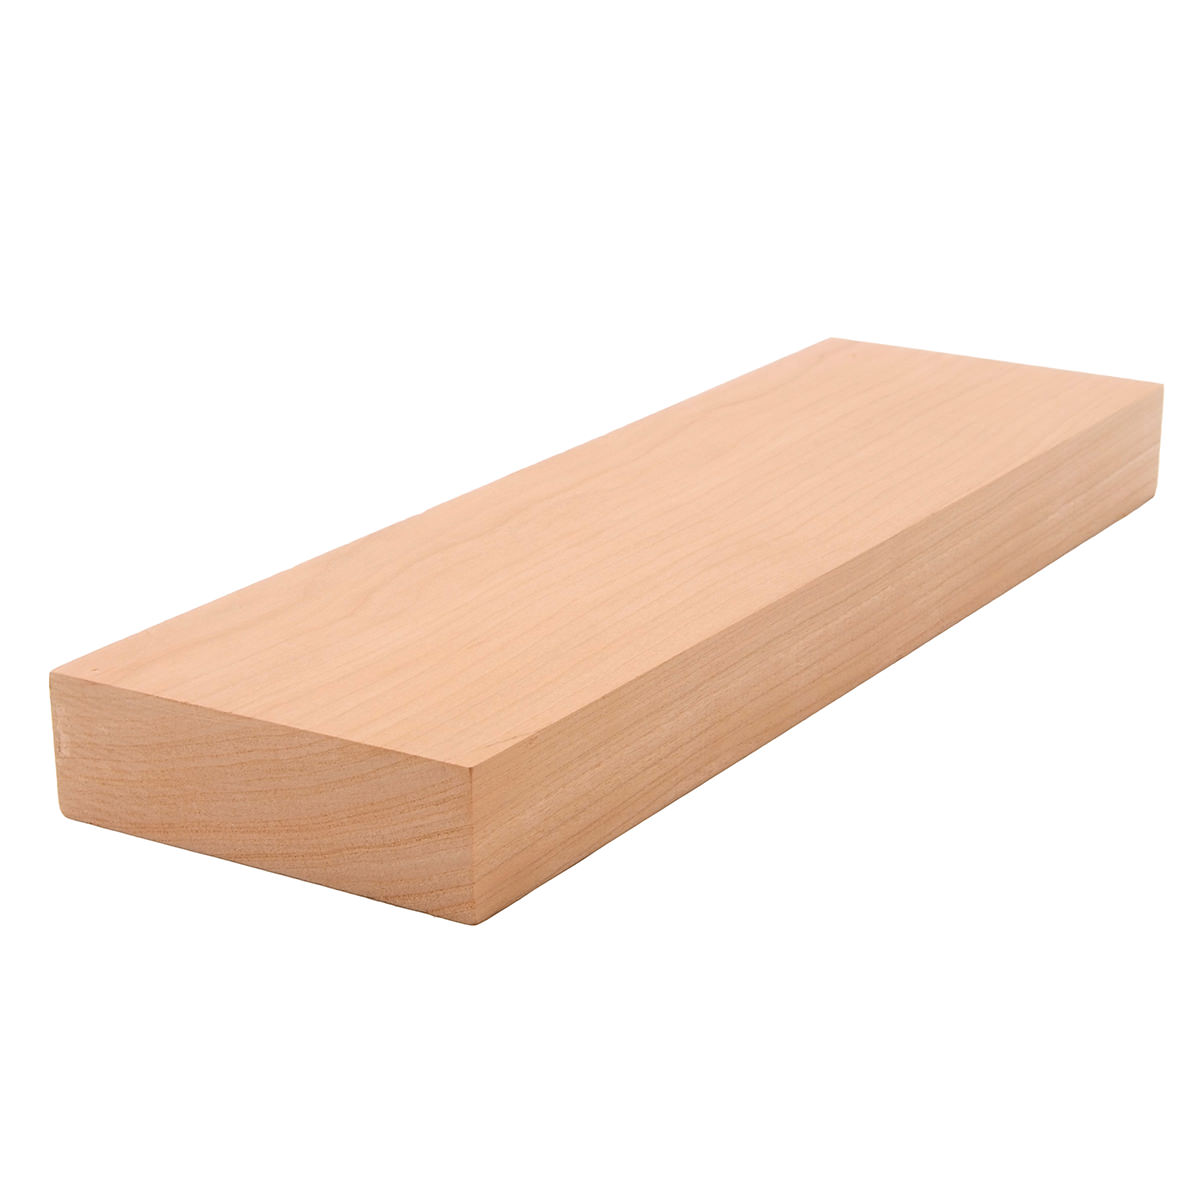 5/4x4 (1" x 31/2") Cherry S4S Lumber, Boards, & Flat